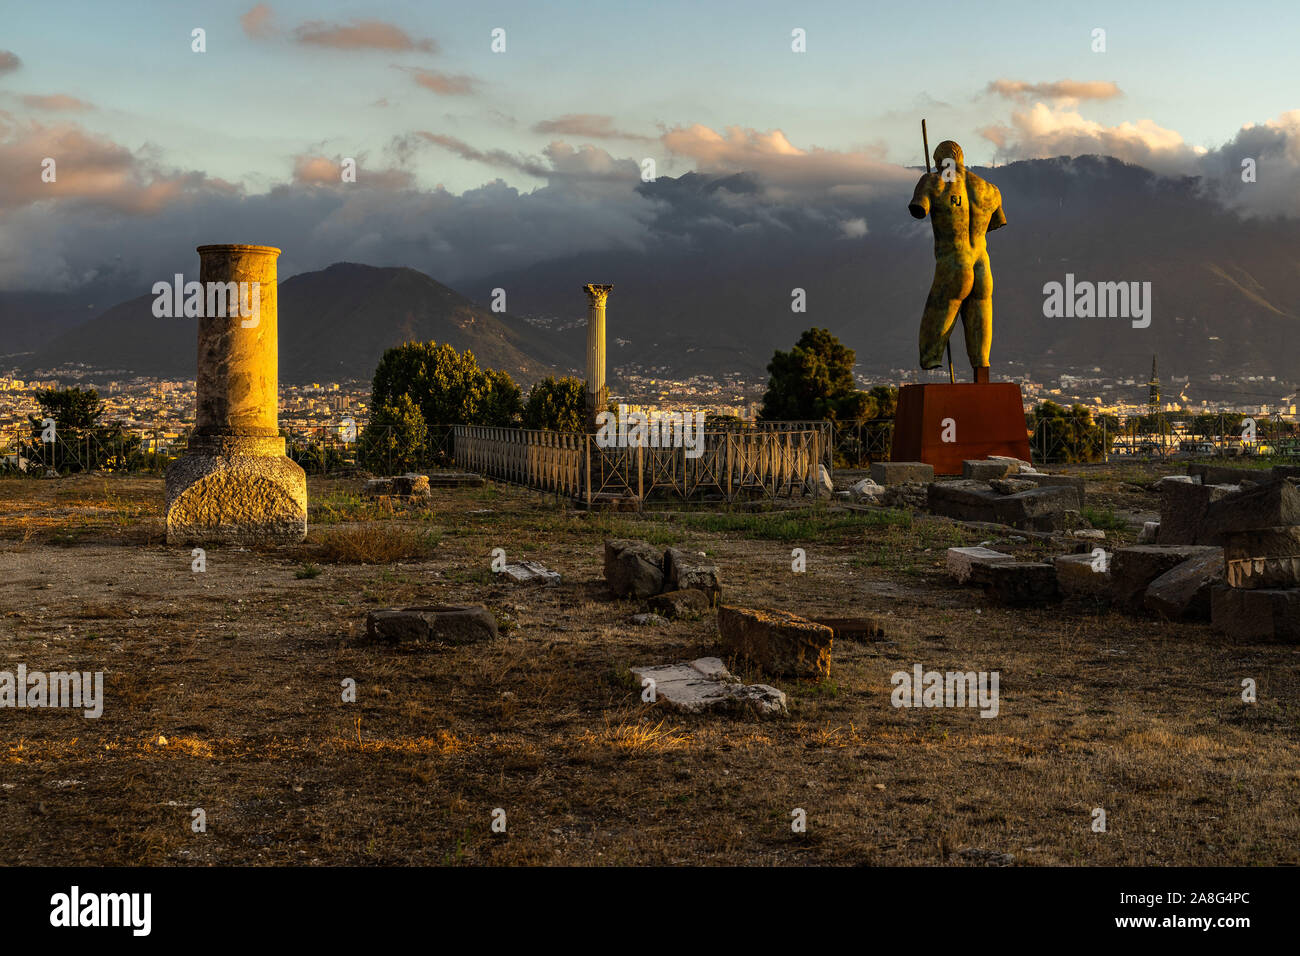 Daedalus statue by Igor Mitoraj overlooking Pompeii ruins at sunset, Campania, Italy Stock Photo